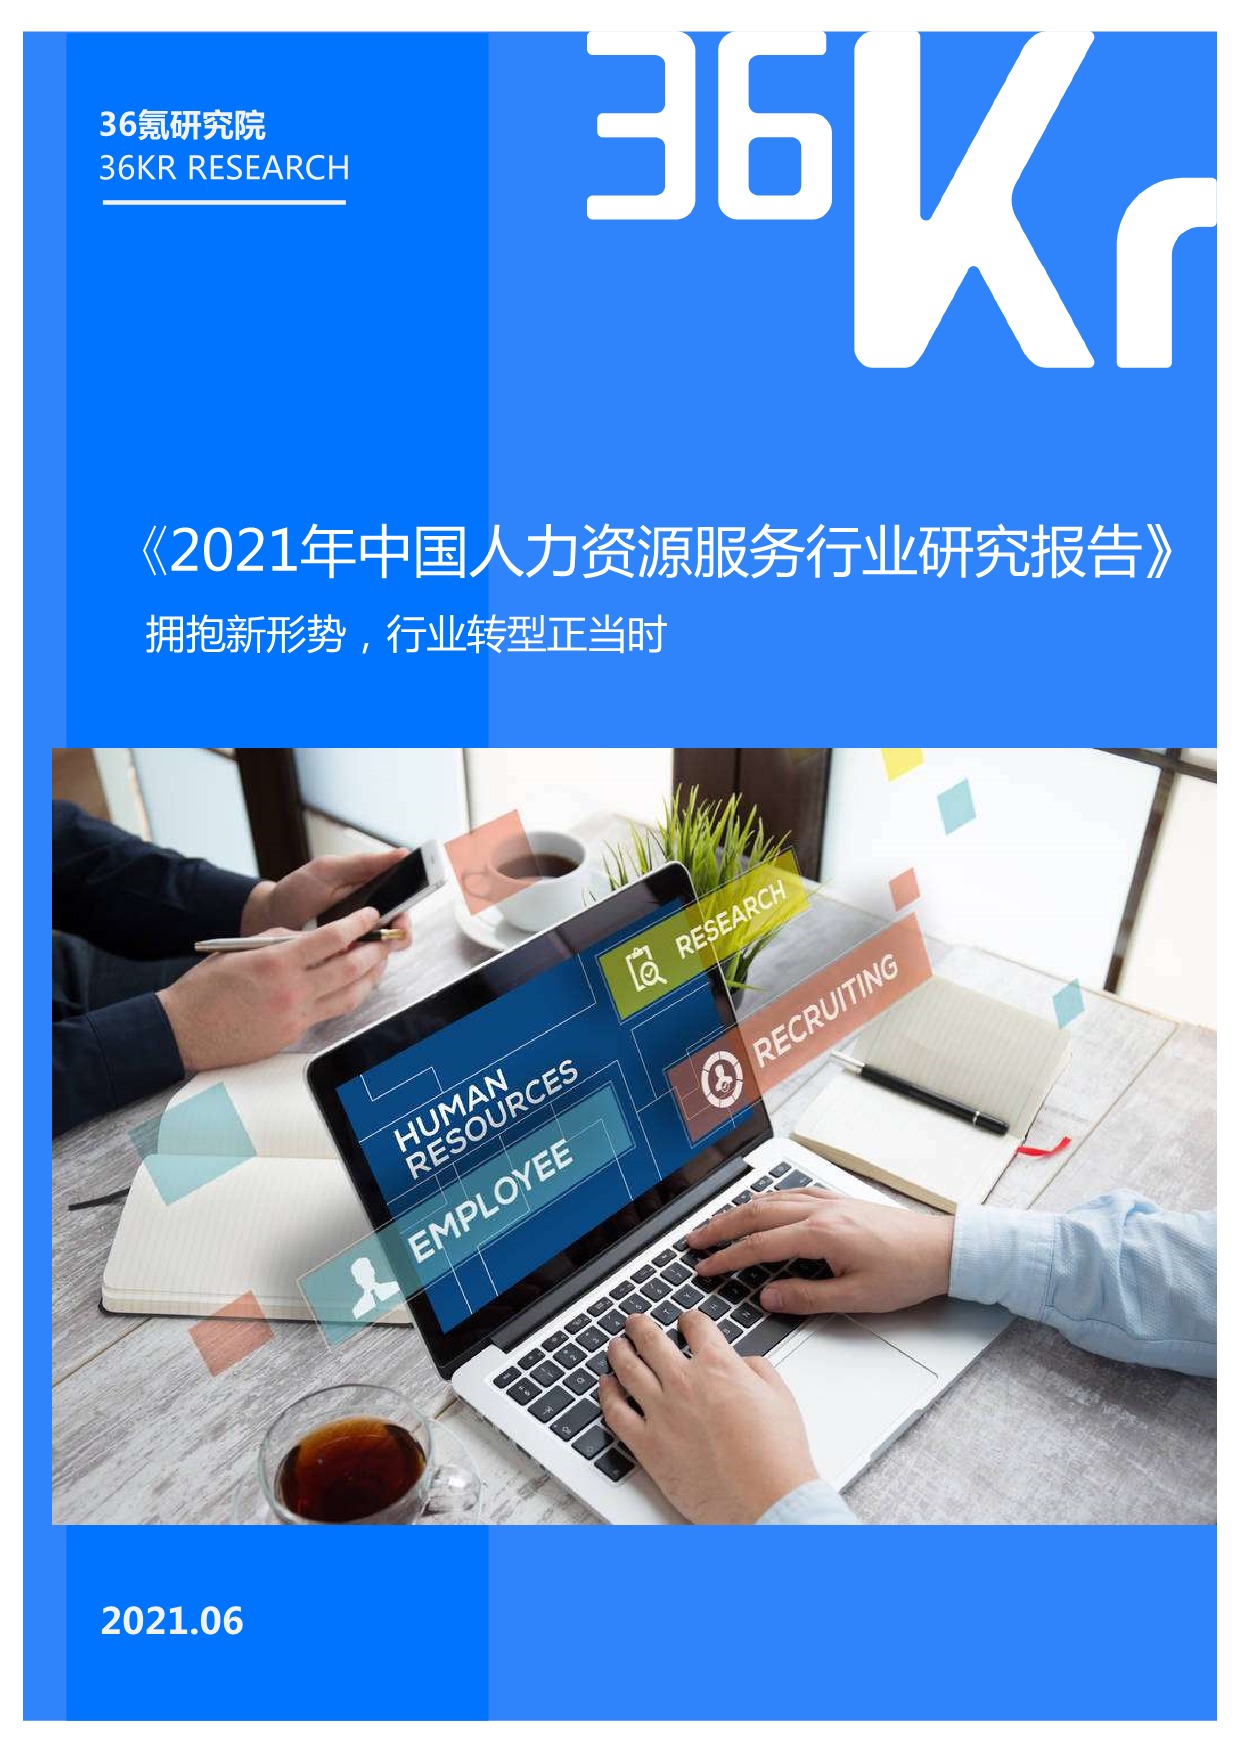 36Kr-2021年中国人力资源服务行业研究报告_1.jpeg